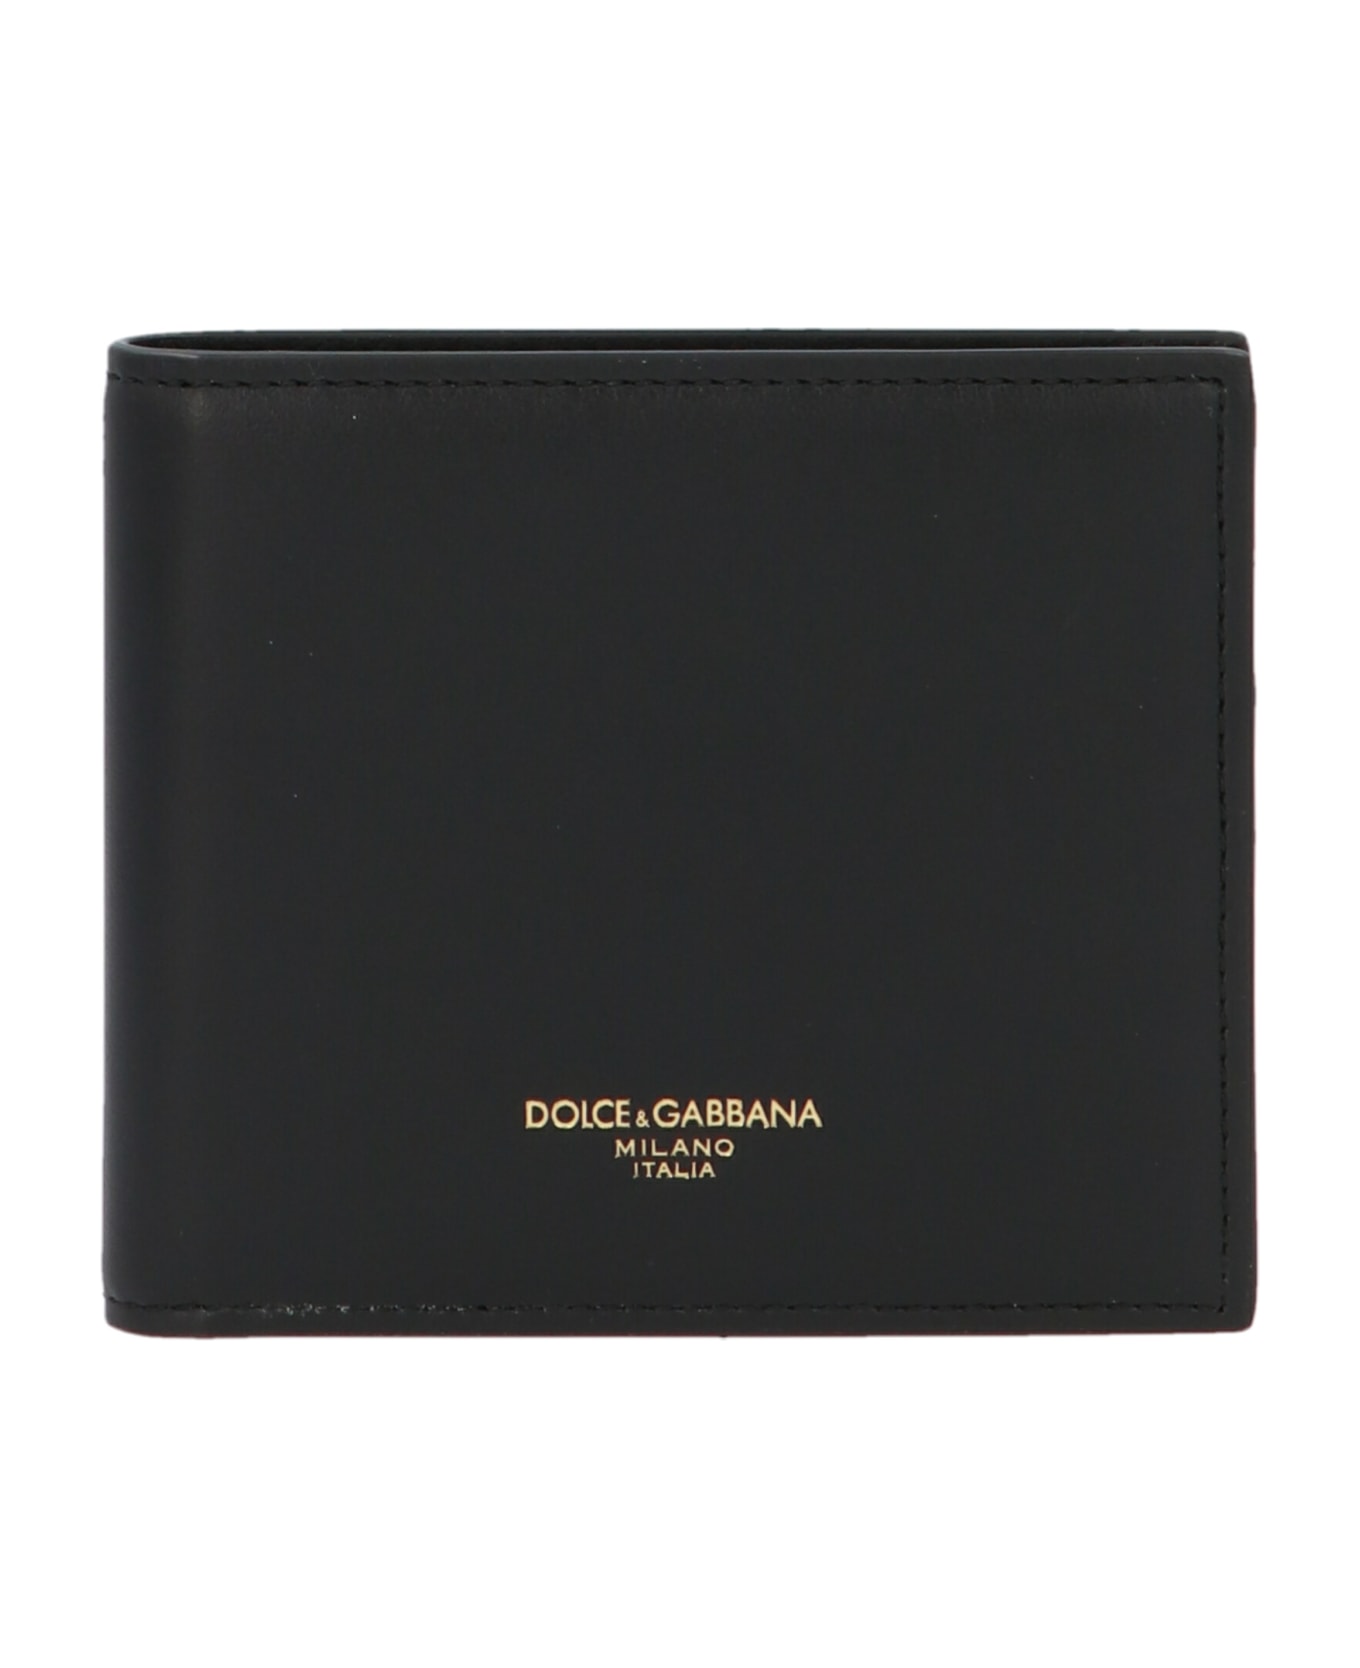 Dolce & Gabbana Logo Printed Wallet - Black  